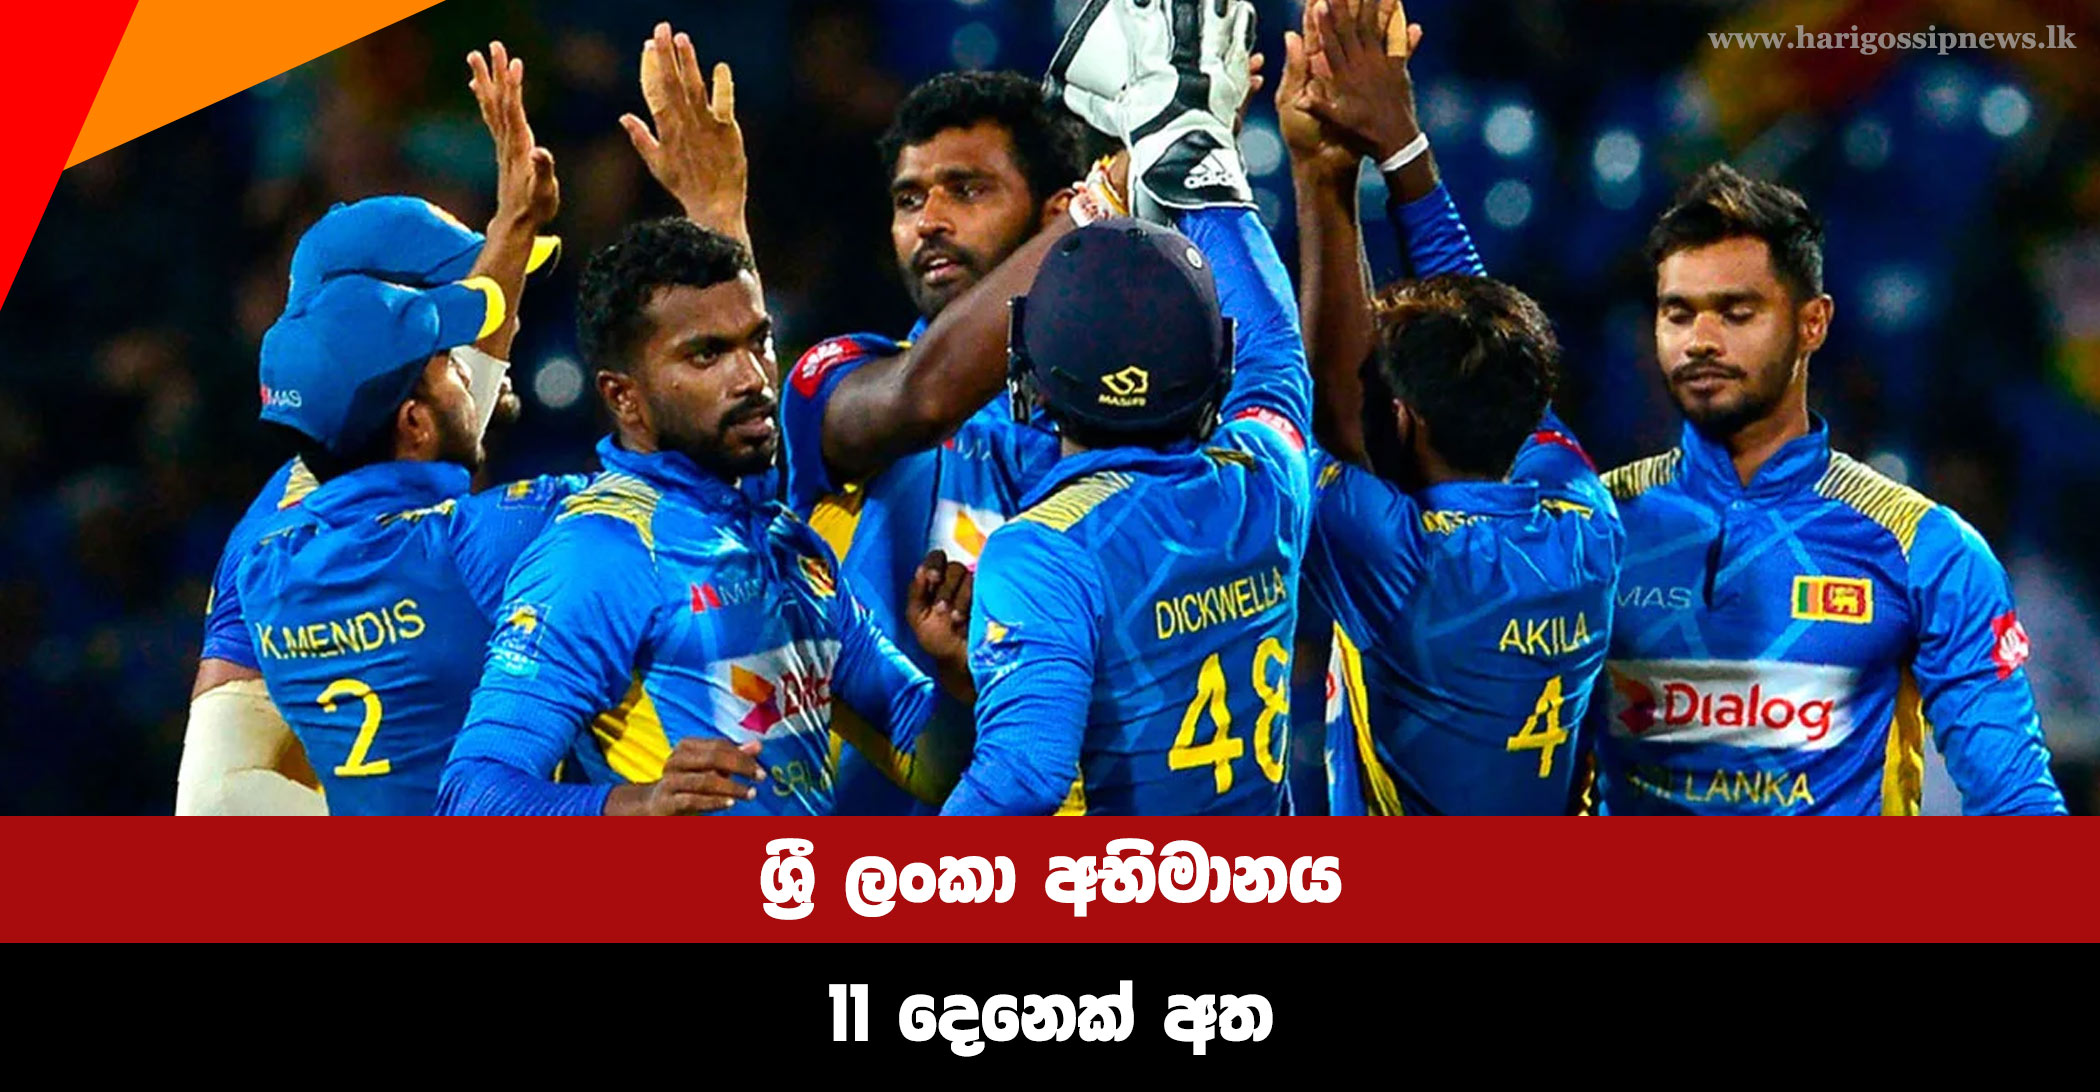 Pride of Sri Lanka in the hands of 11 people